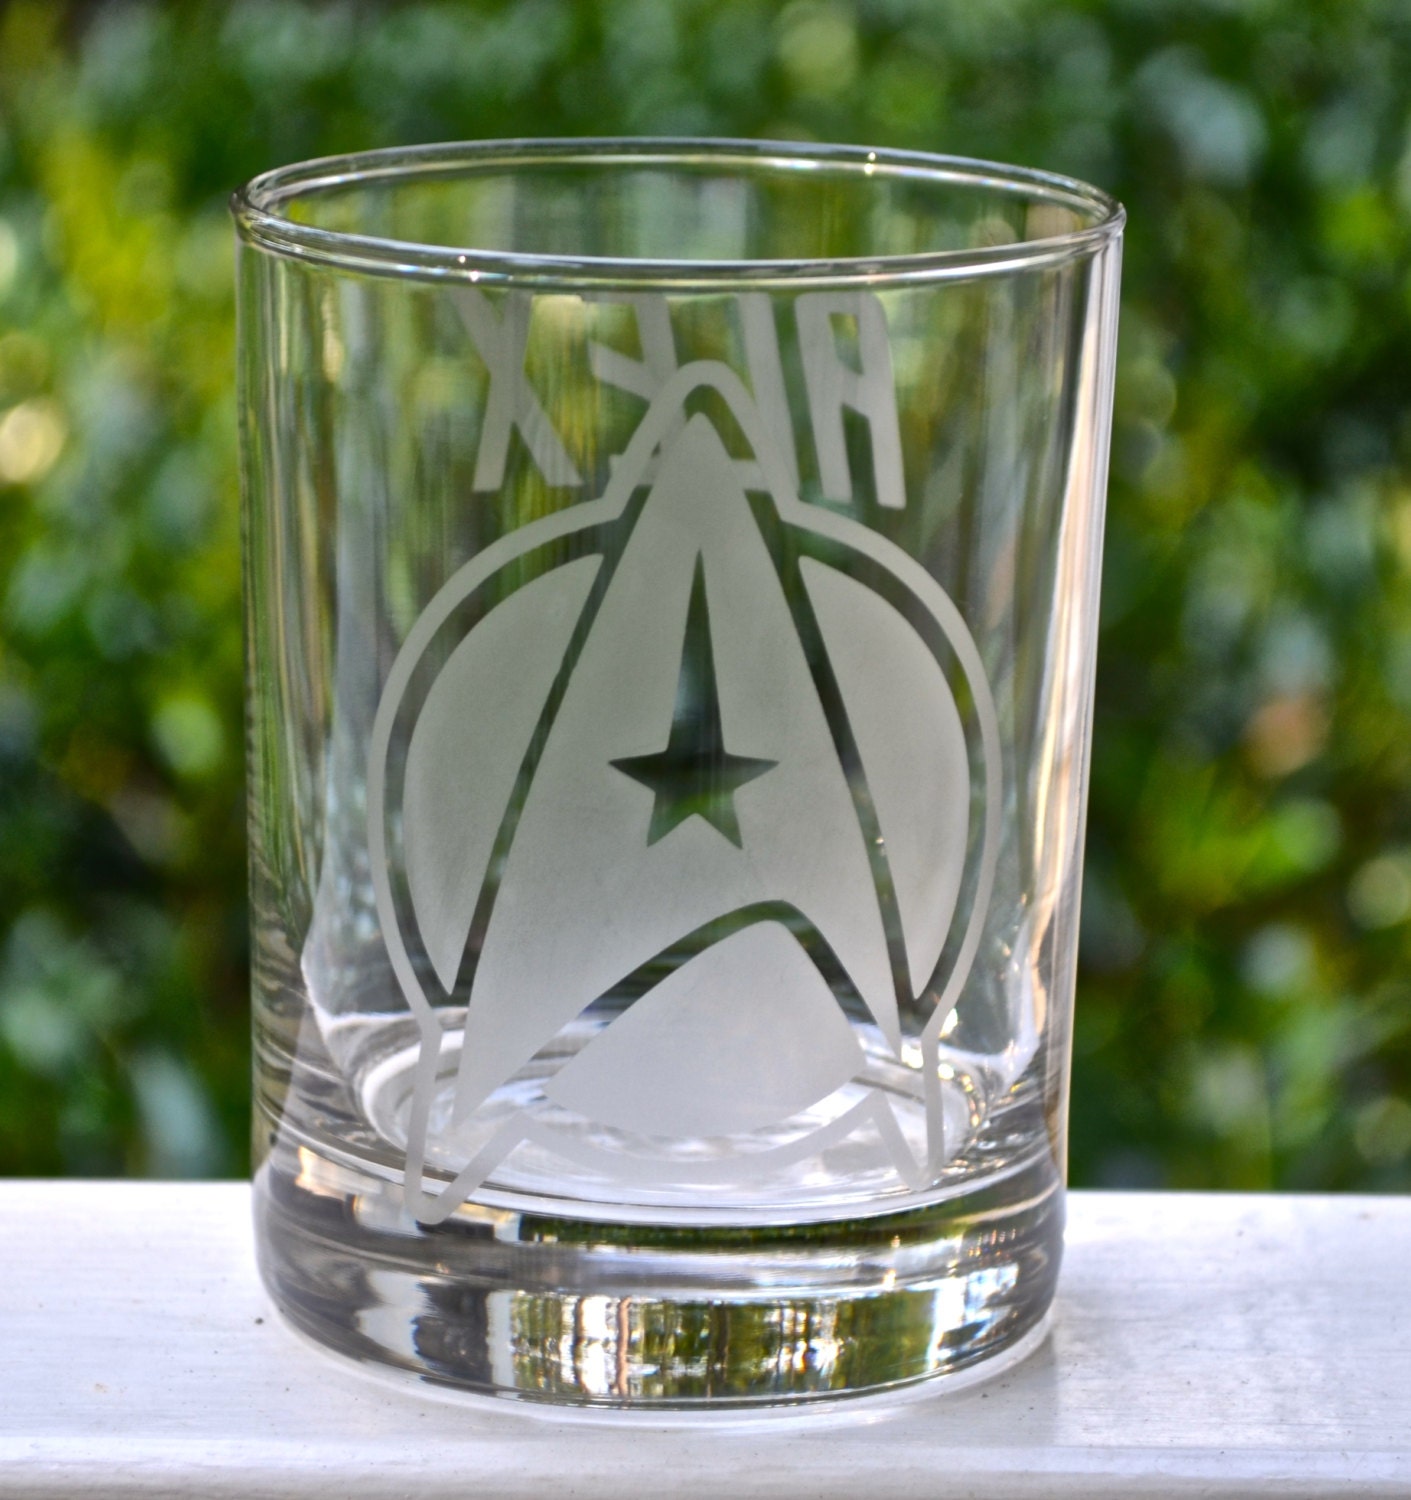 star trek etched glass